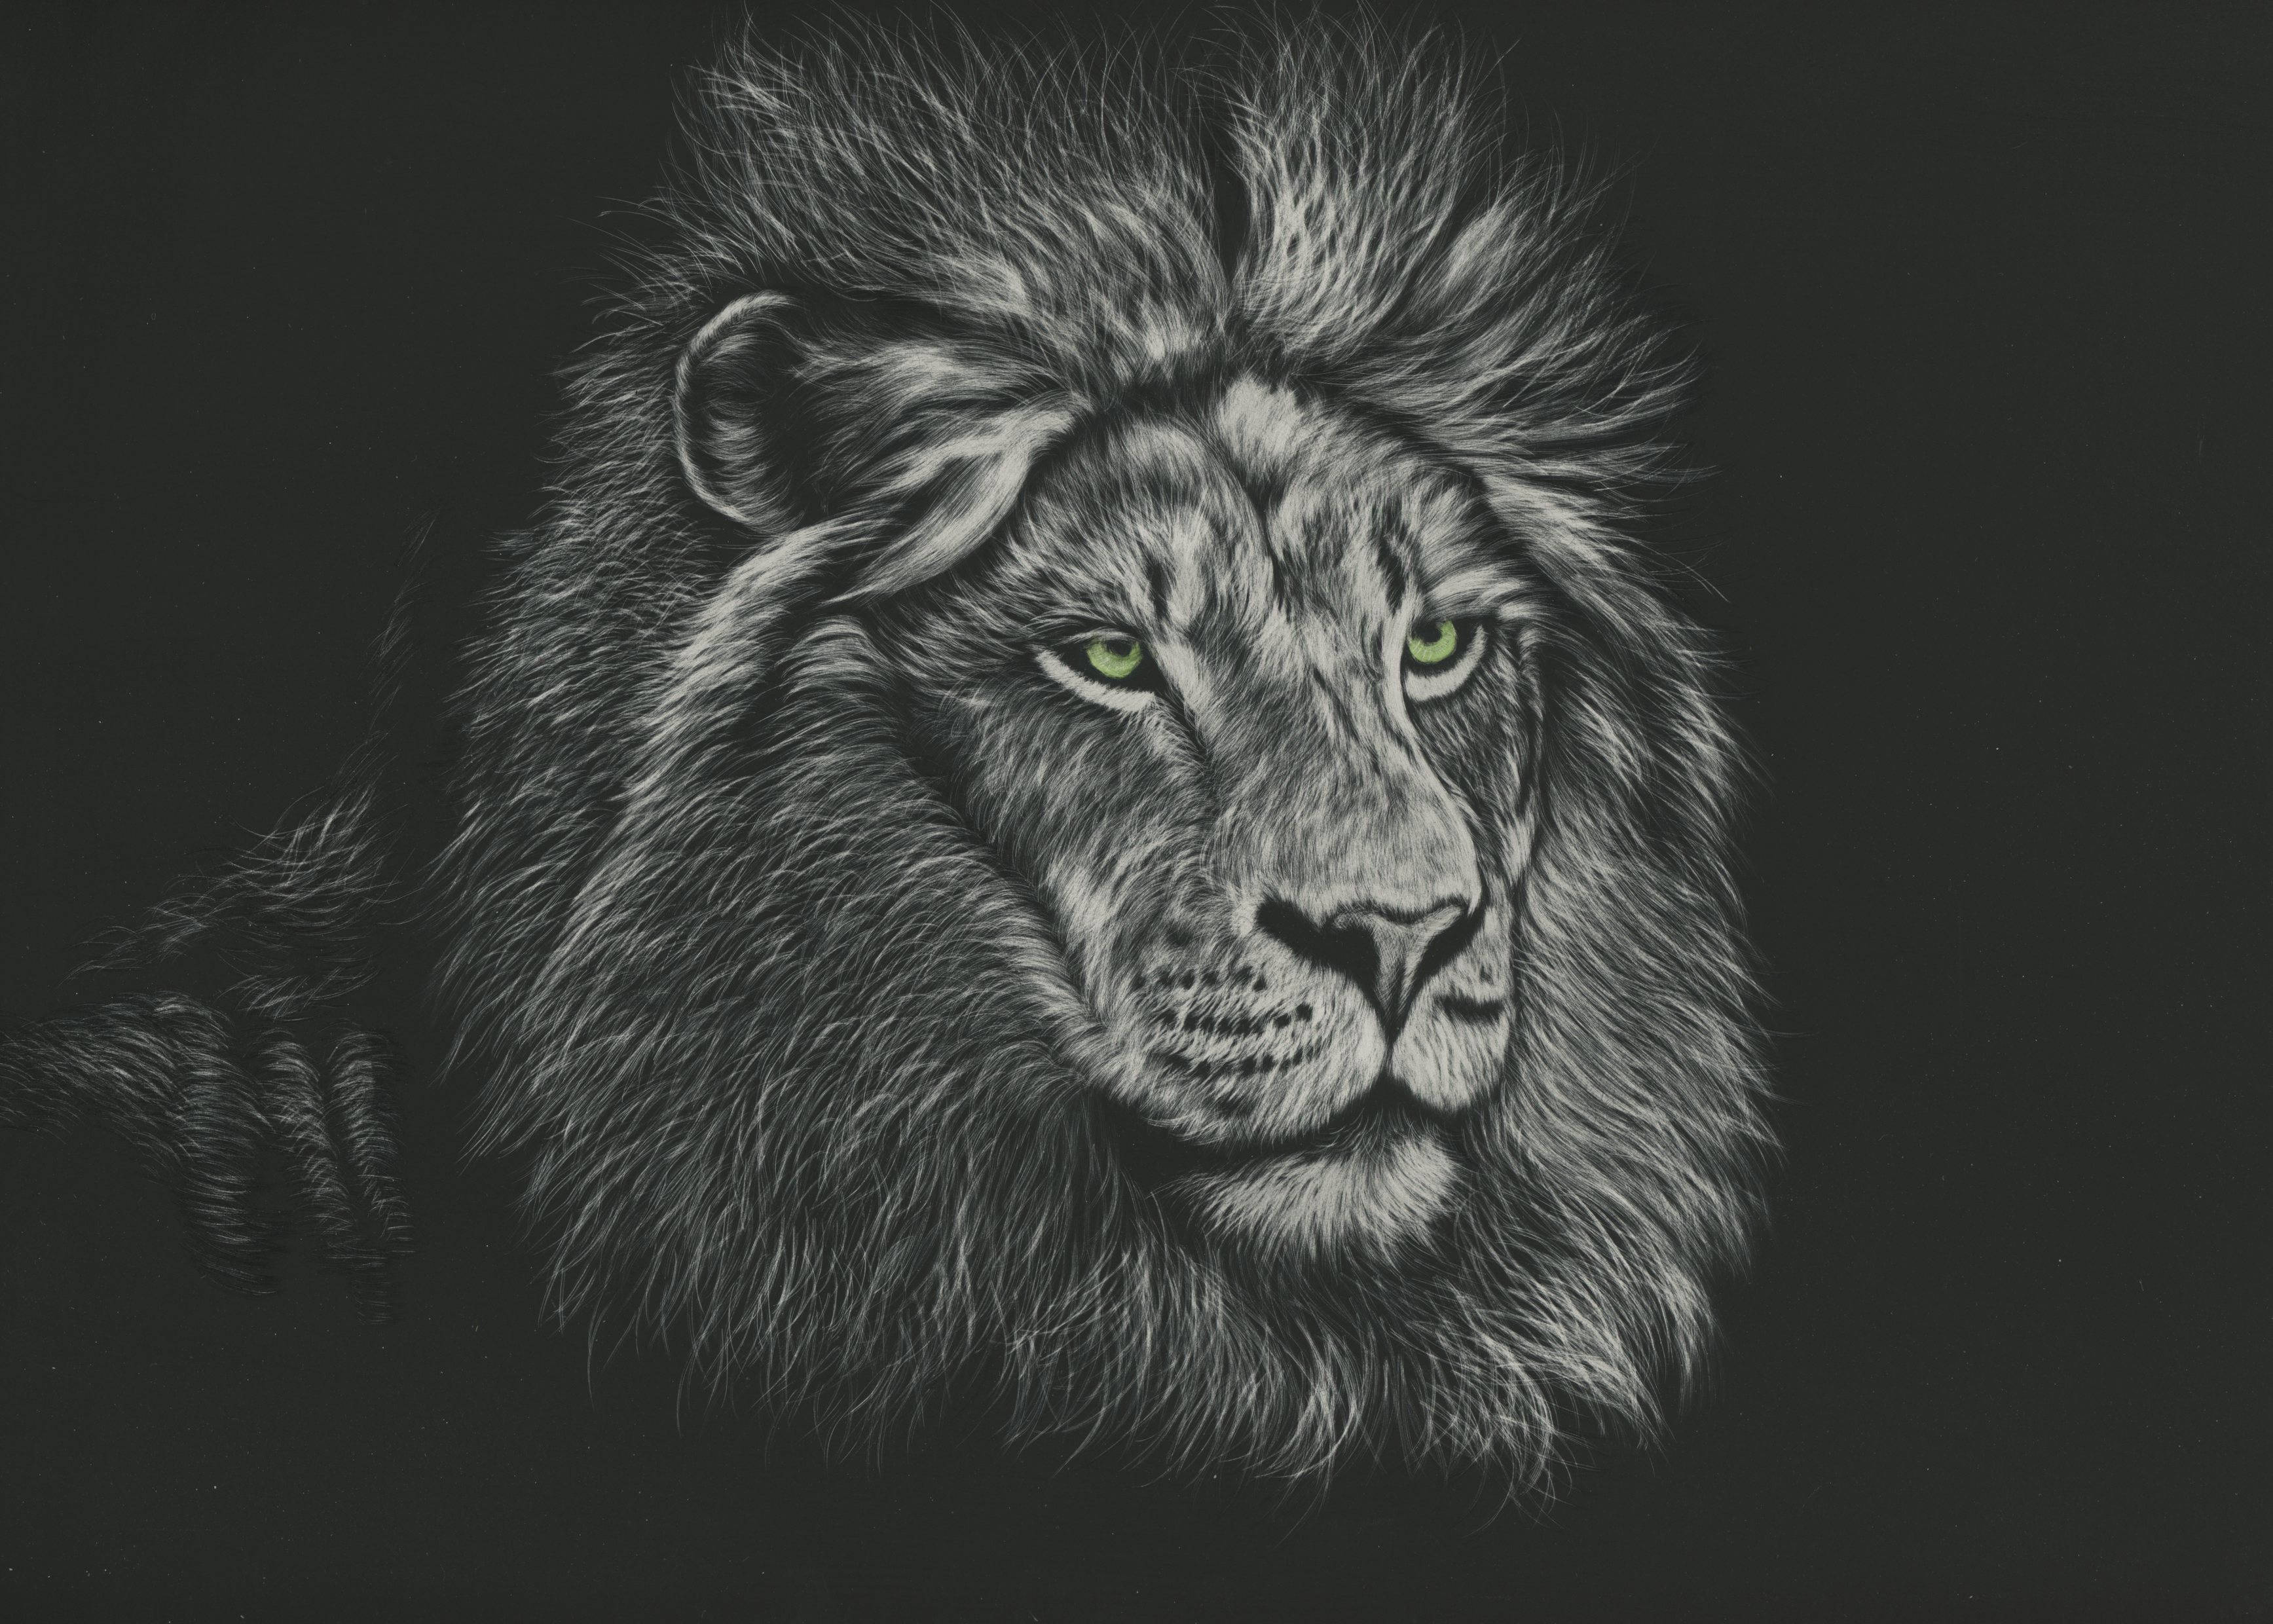 Black And White Predator Lion Background